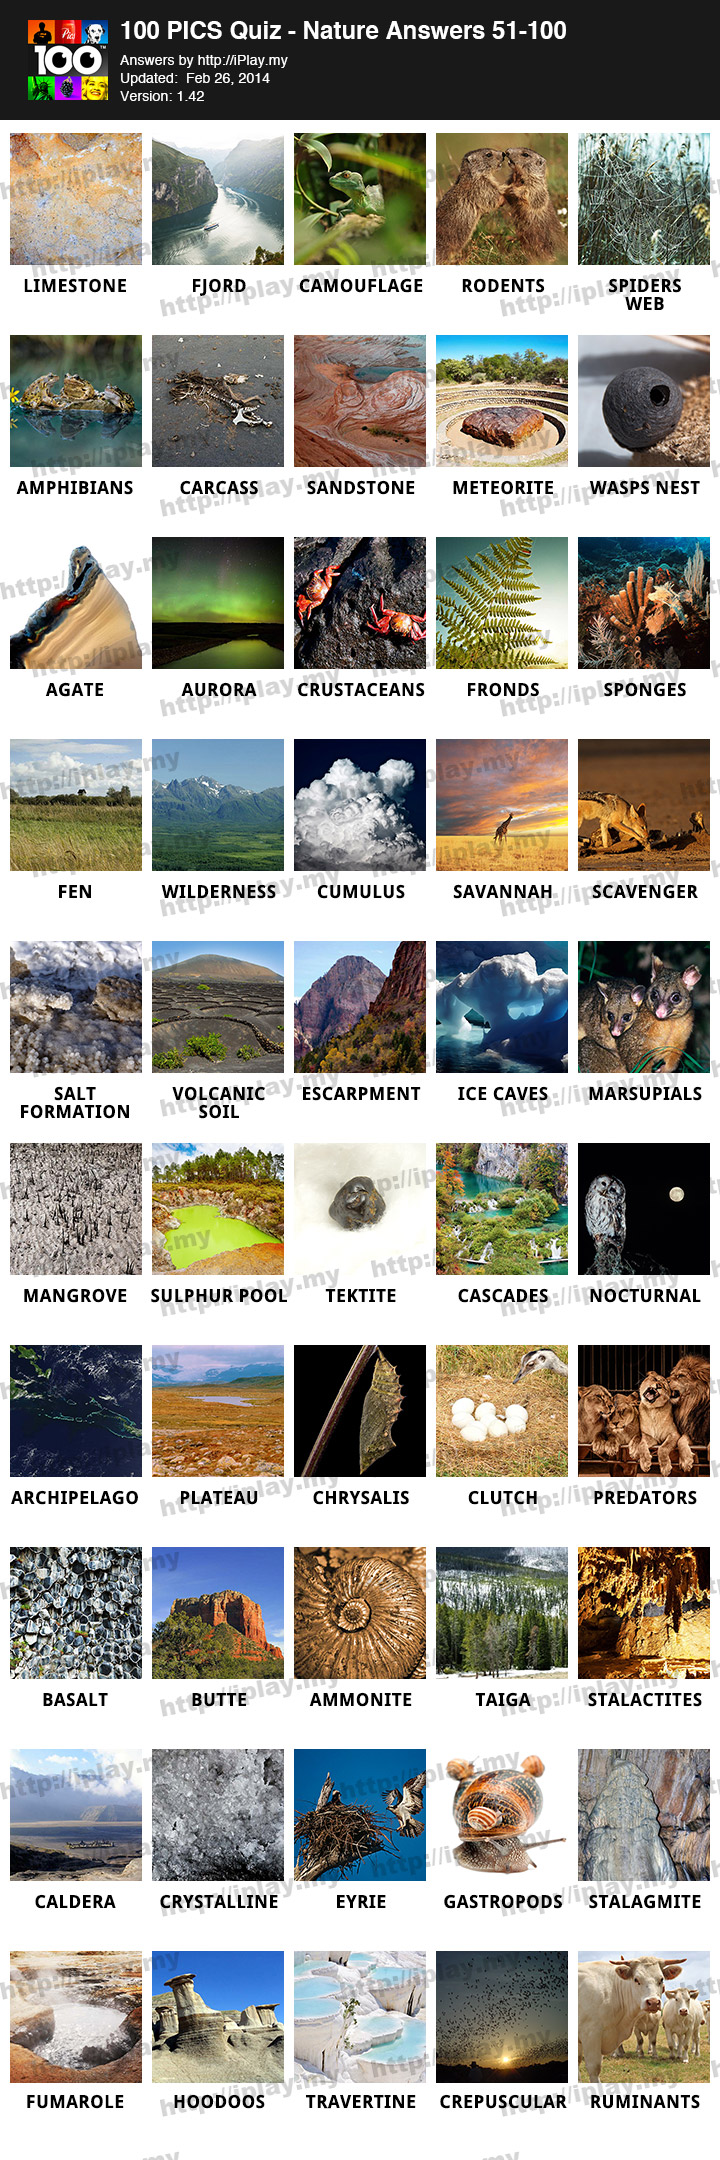 100-Pics-Quiz-Nature-Answers-51-100.jpg